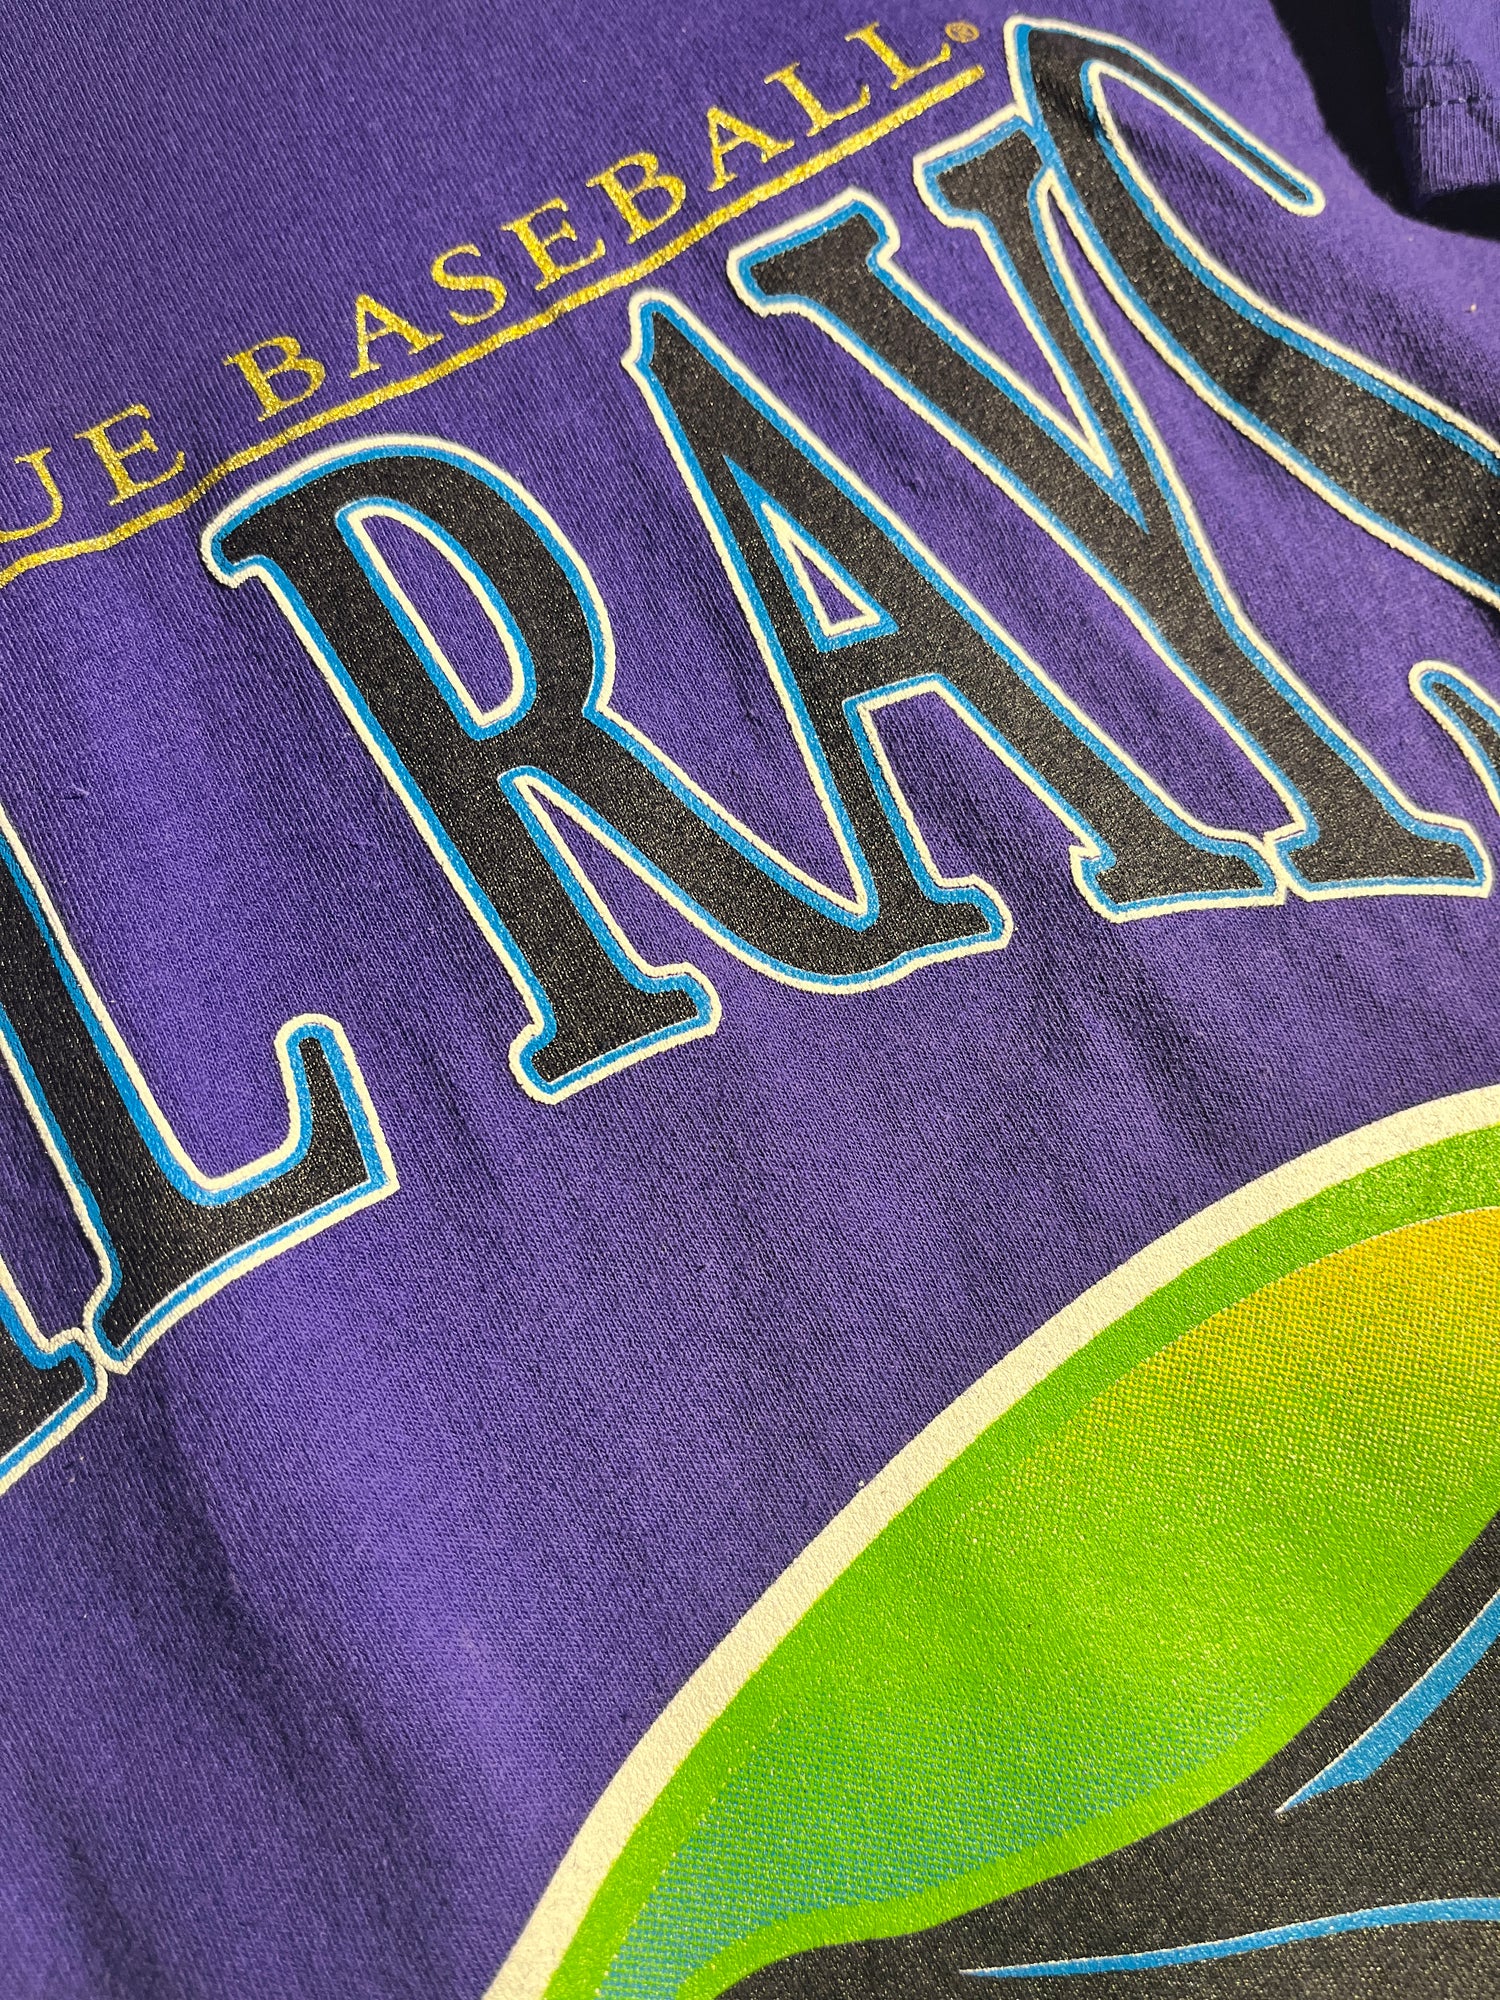 MLB x Topps Tampa Bay Rays  Retro Devil Rays Trading Card T-Shirt